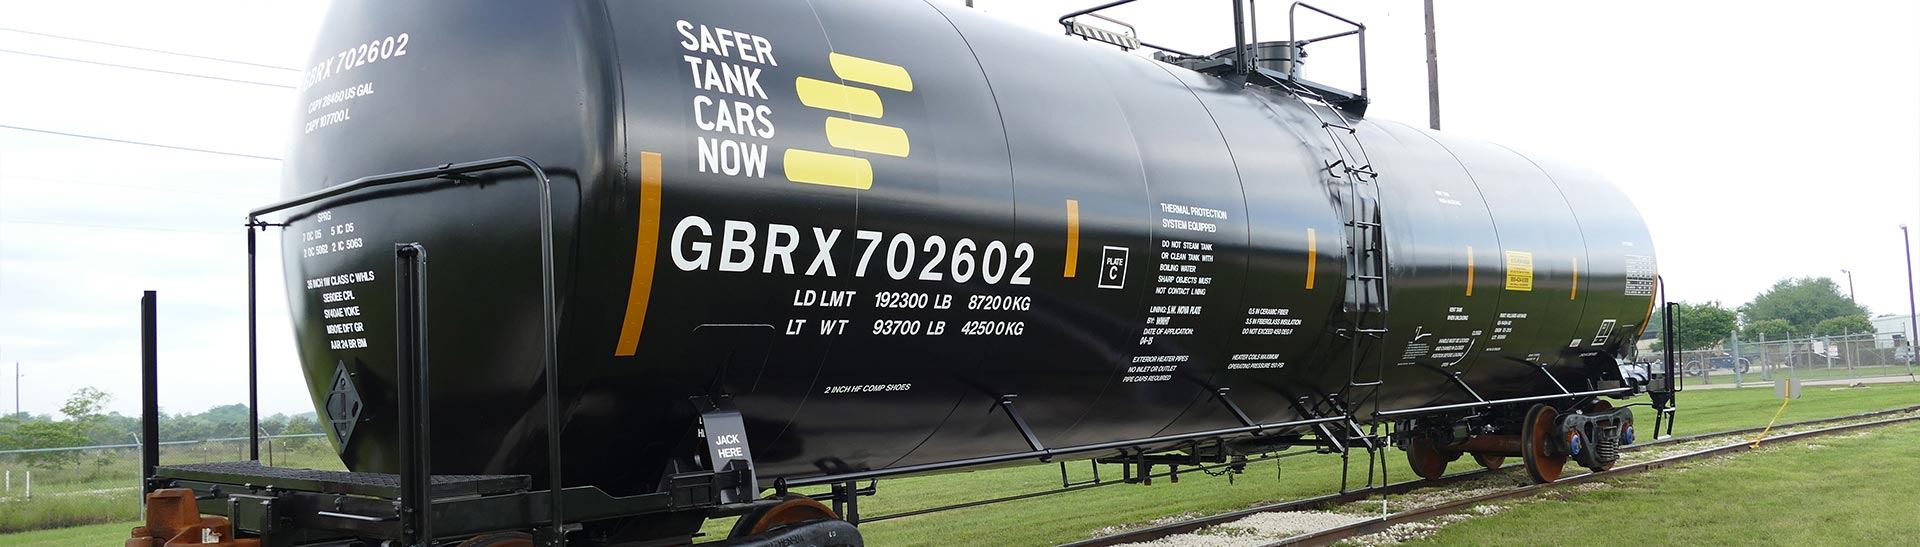 28,600 Gallon Crude Oil Tank Car